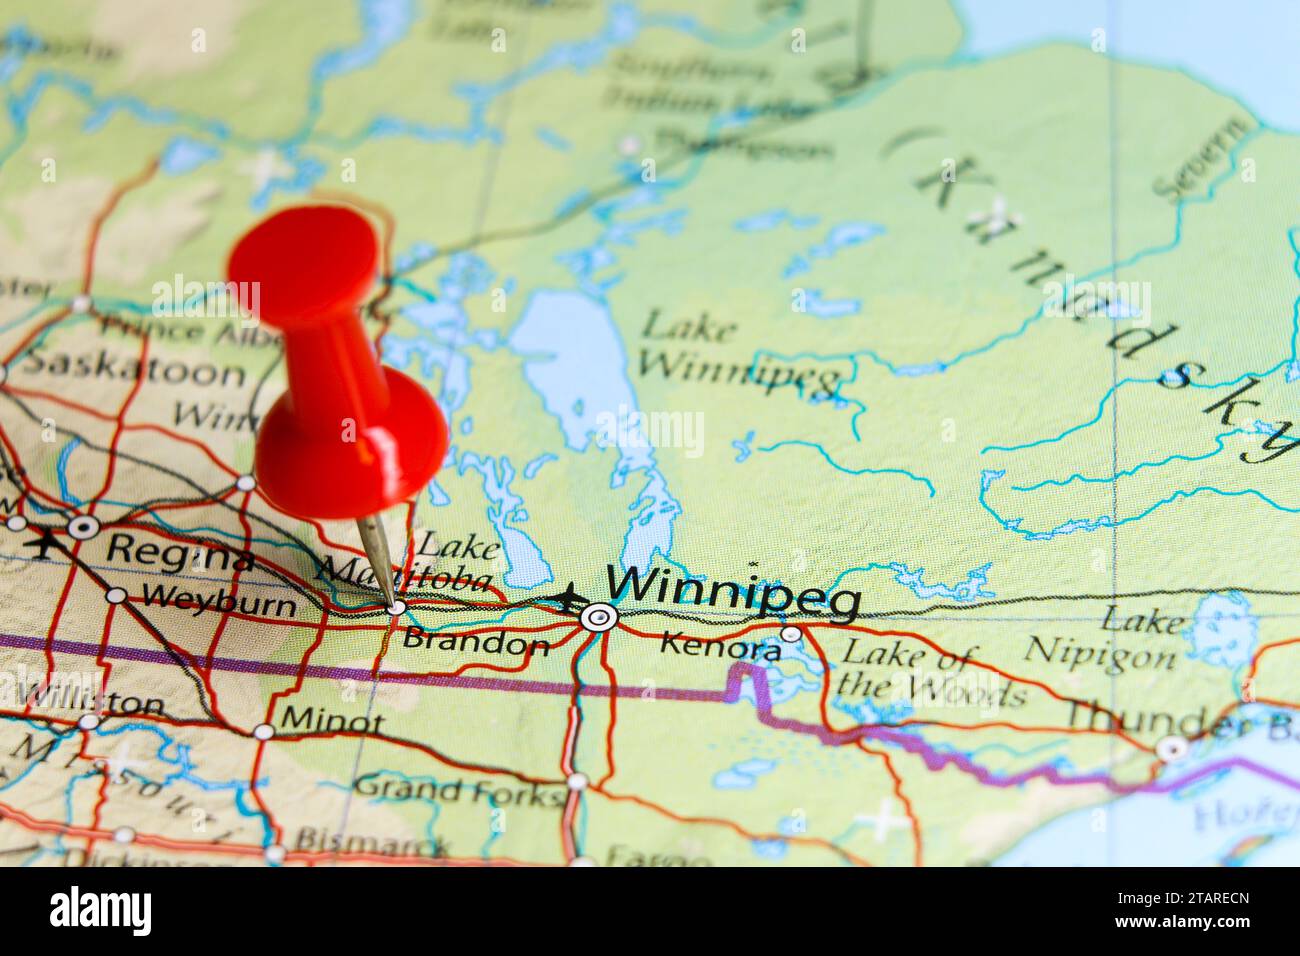 Brandon, Canada pin on map Stock Photo